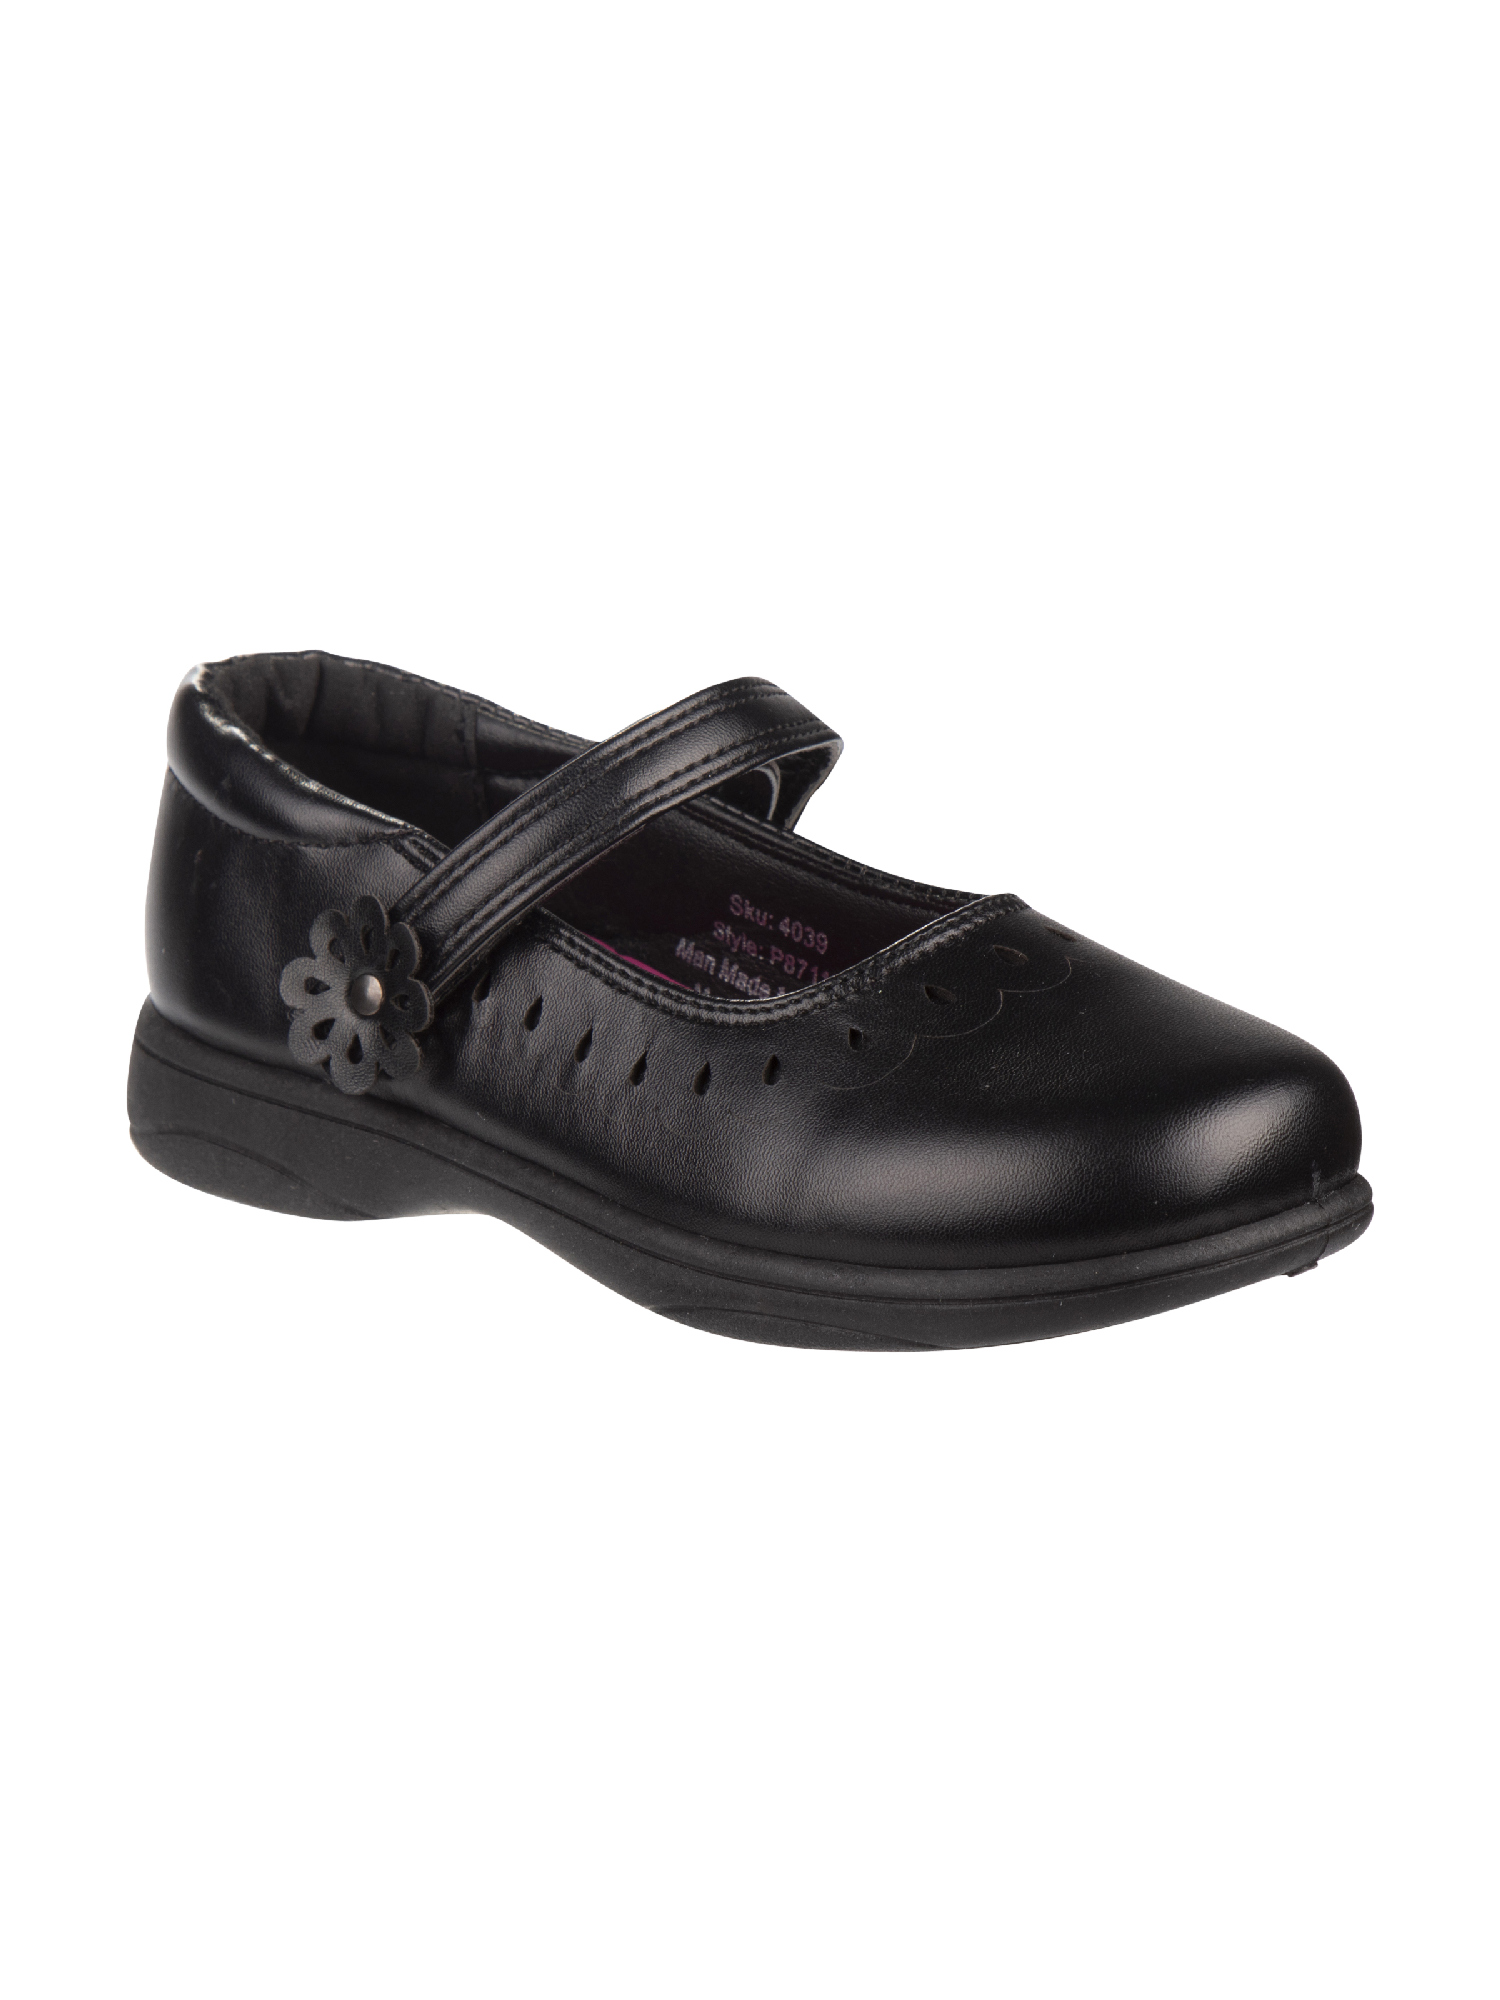 stylish black school shoes